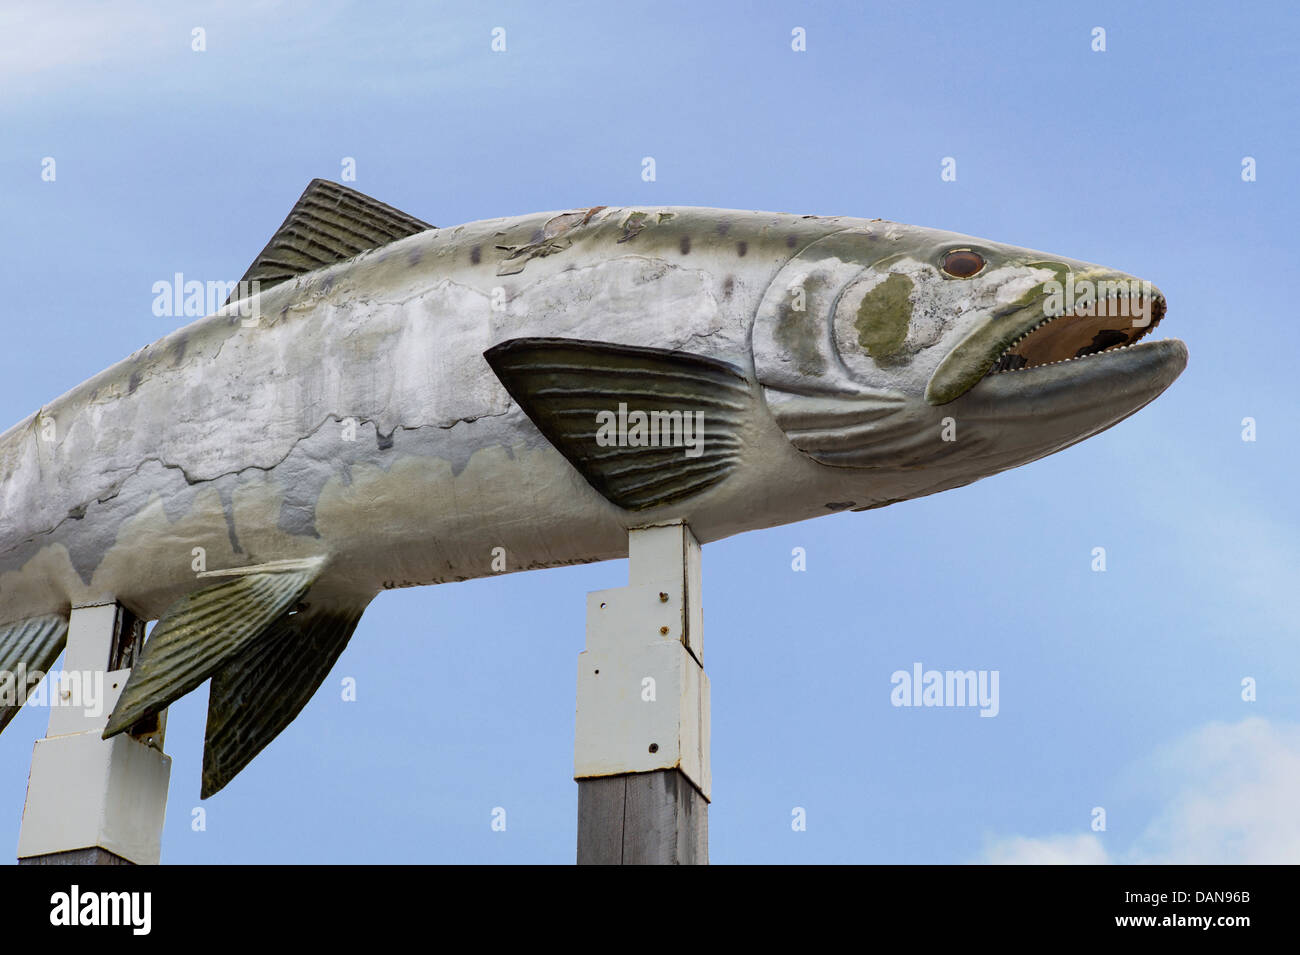 Huge Salmon sculpture for Land Sharks restaurant, Valdez, Alaska, USA Stock Photo